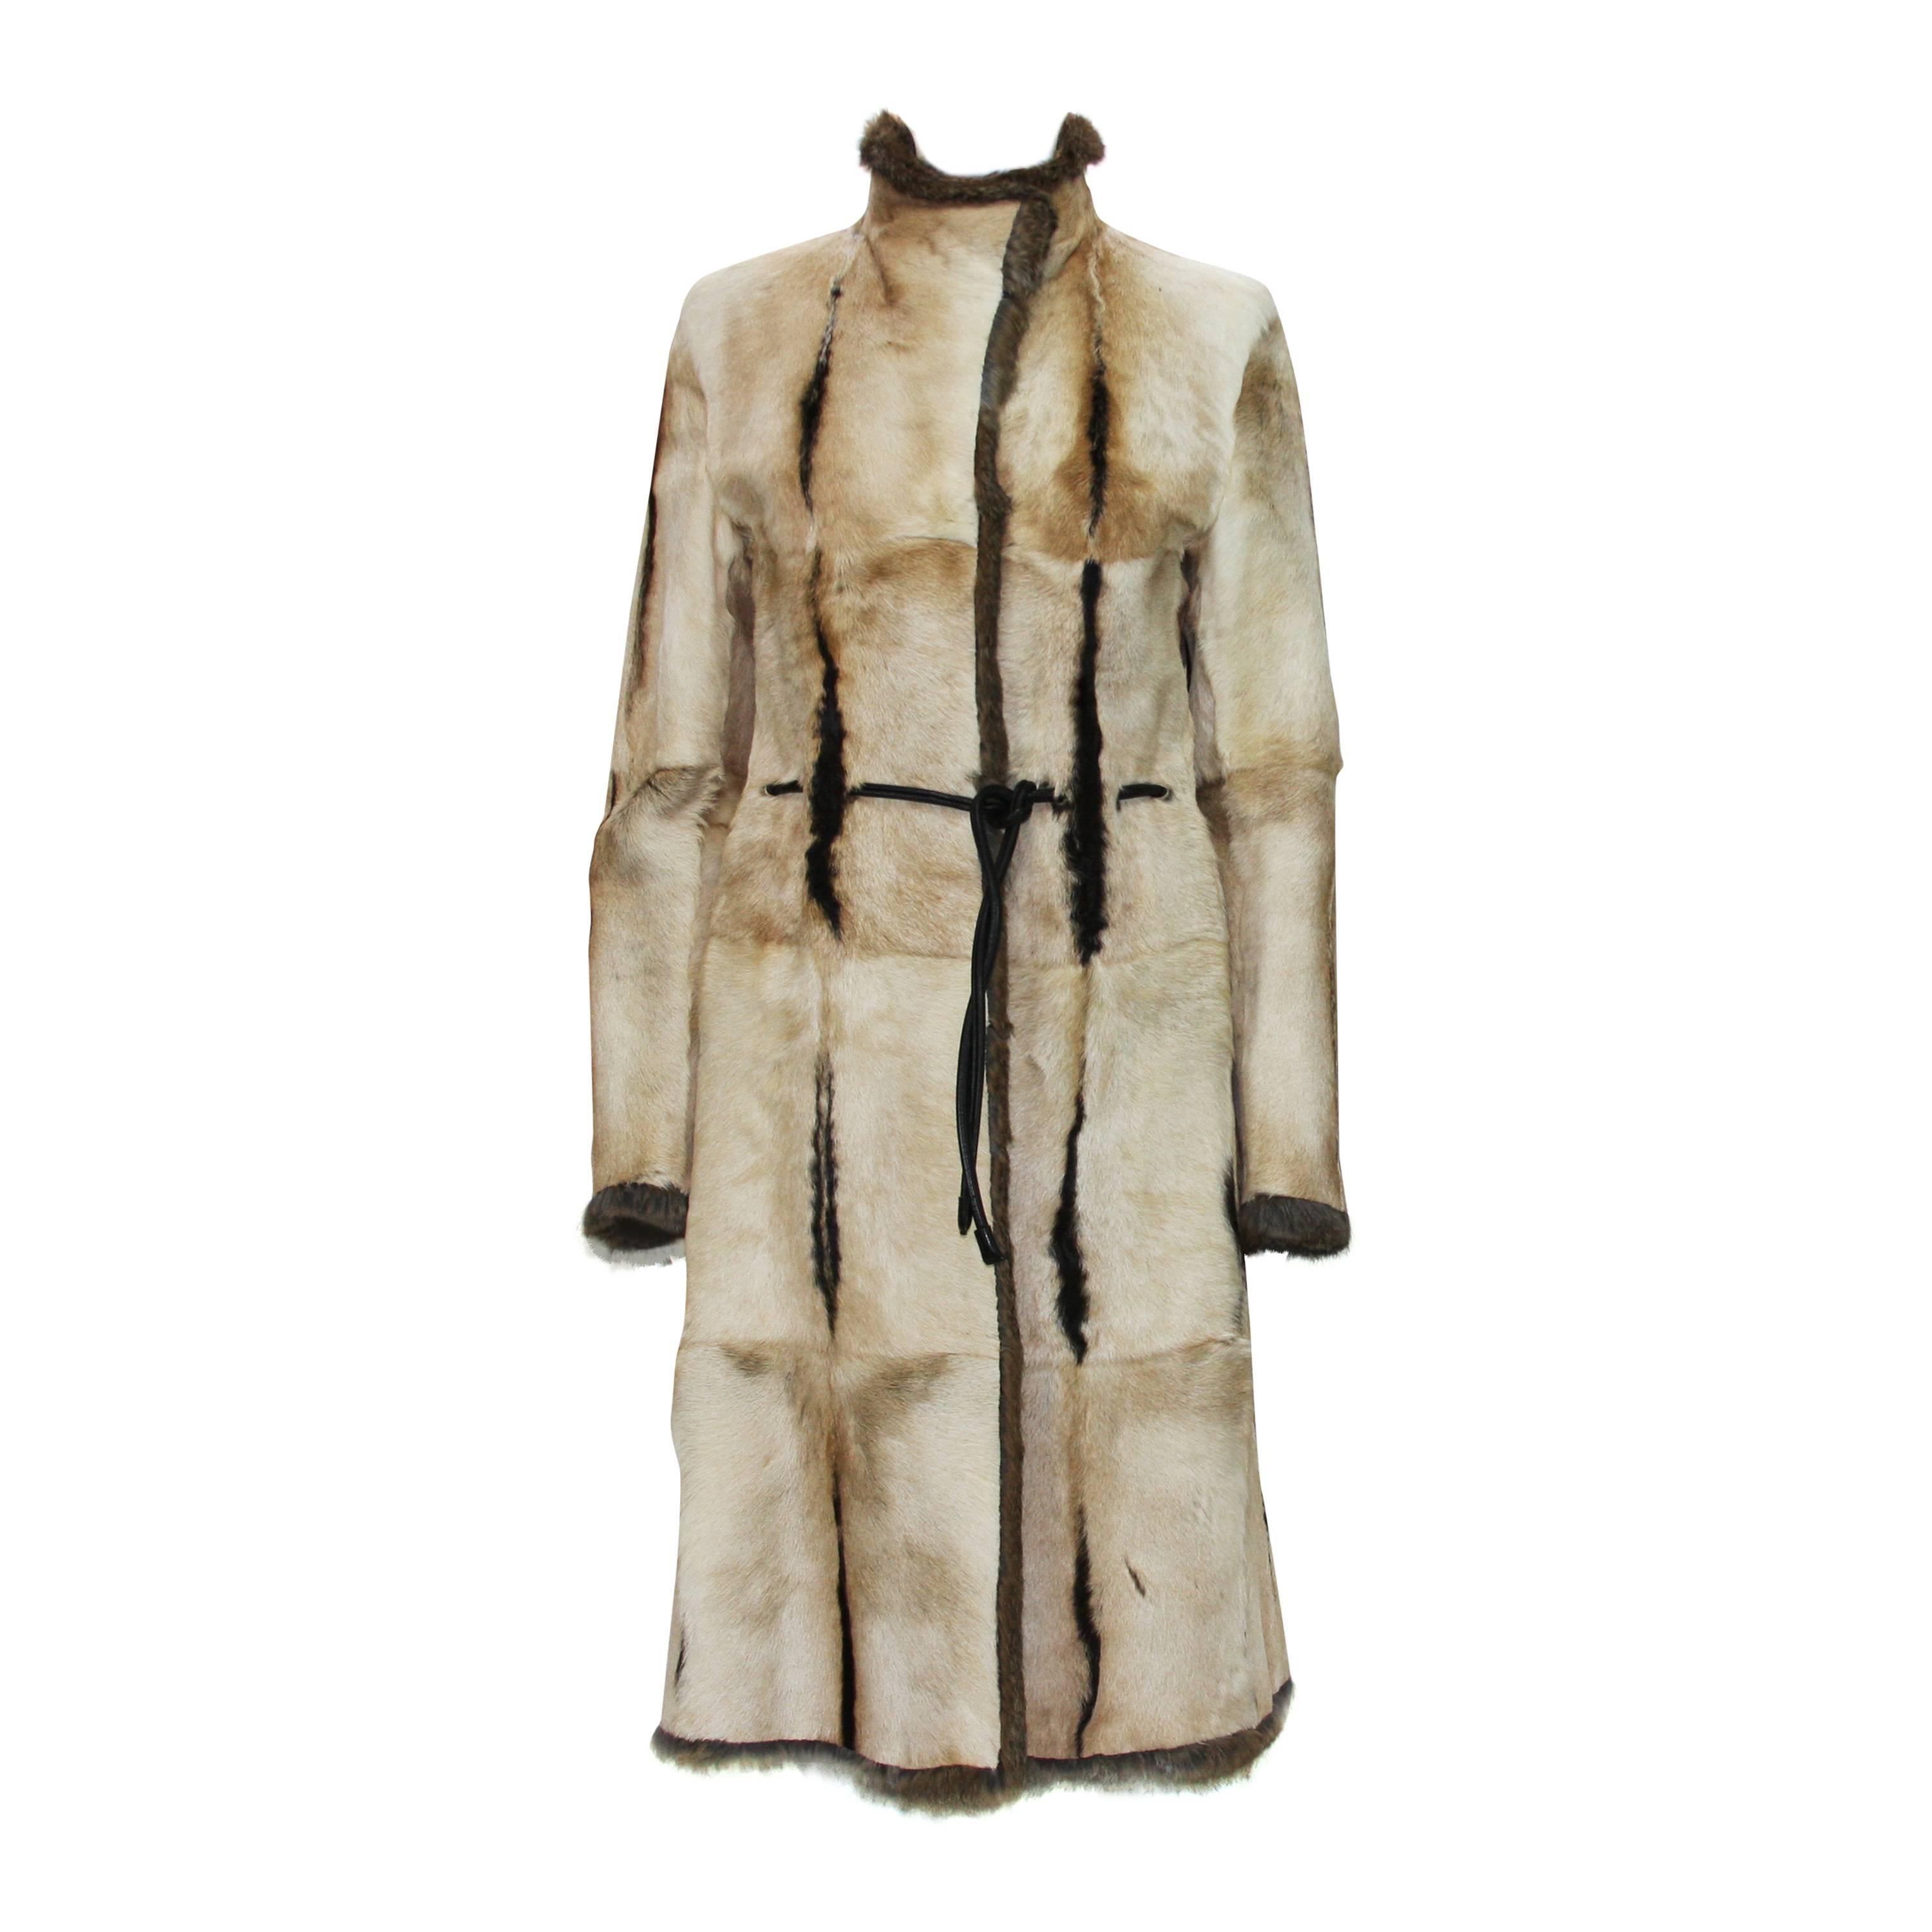 Tom Ford for Gucci Reversible Fur Beige Coat